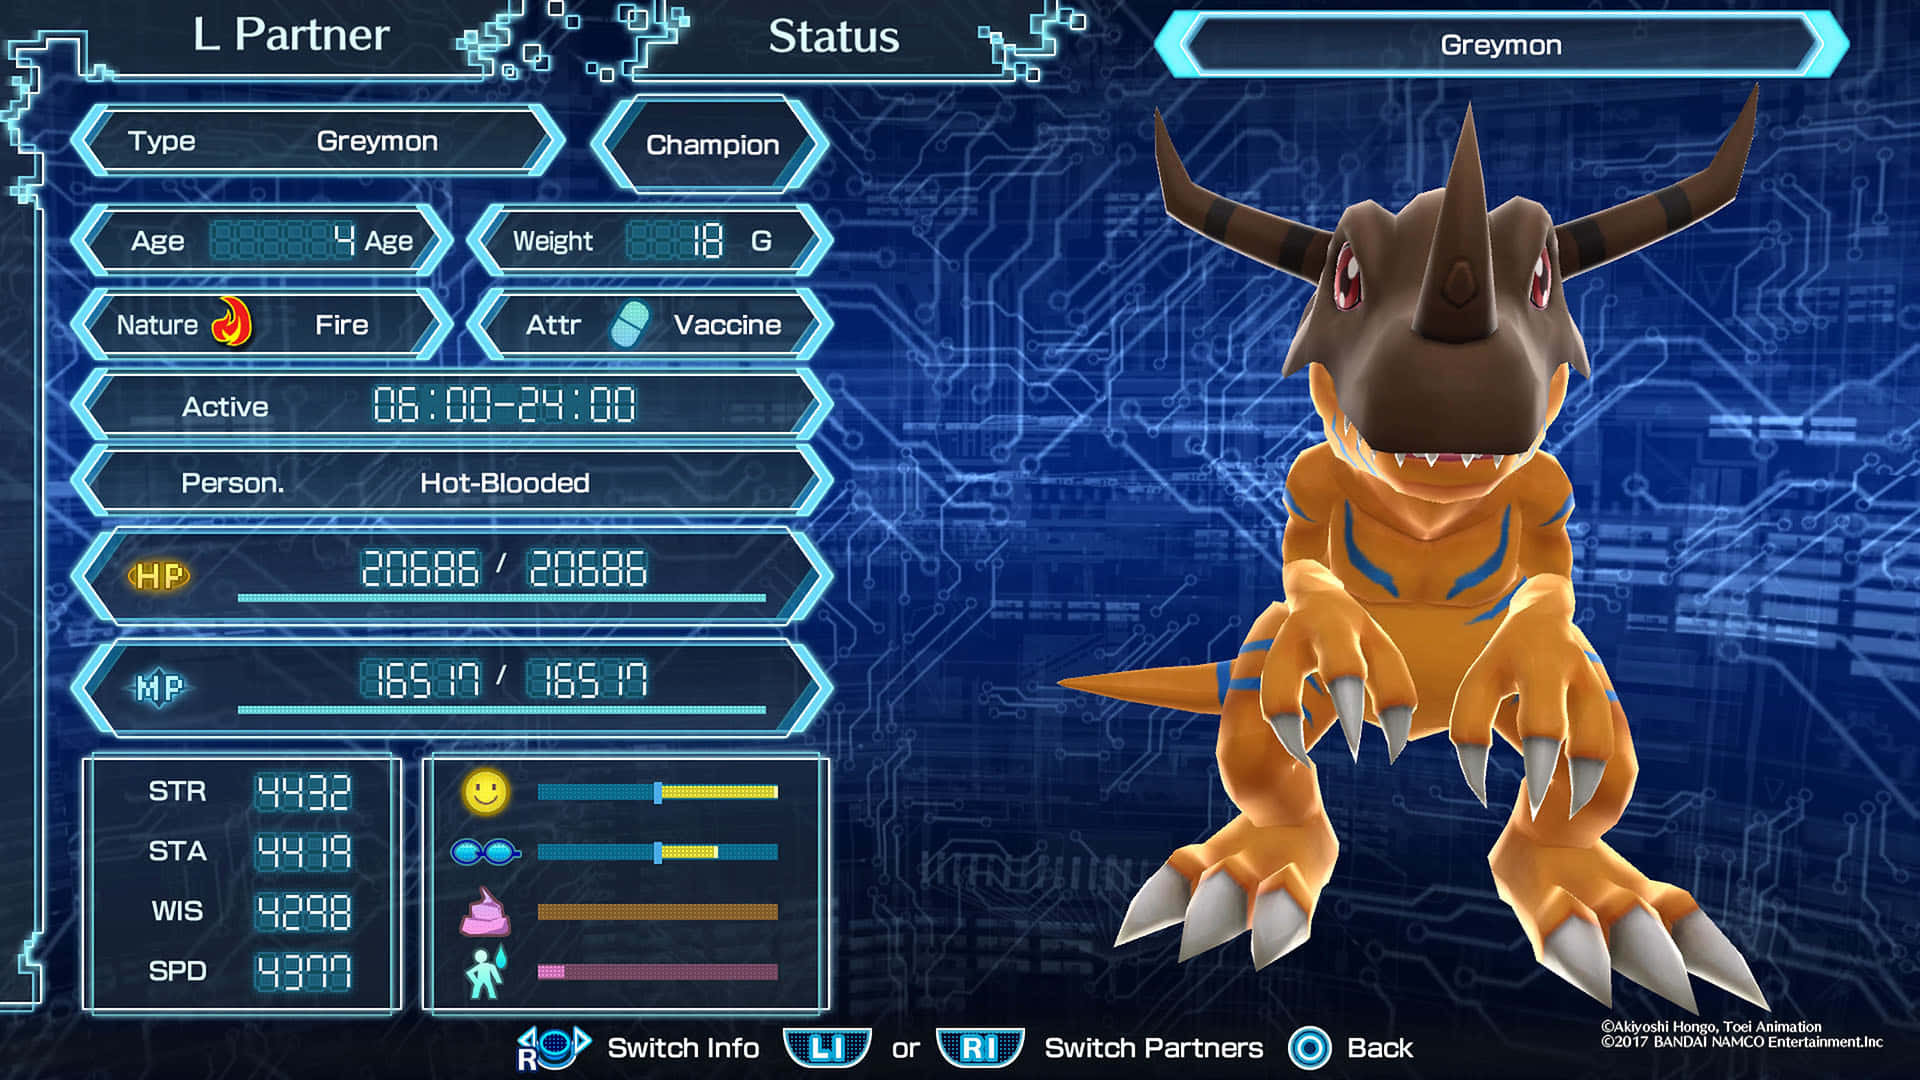 Imagende Estadísticas De Digimon Greymon